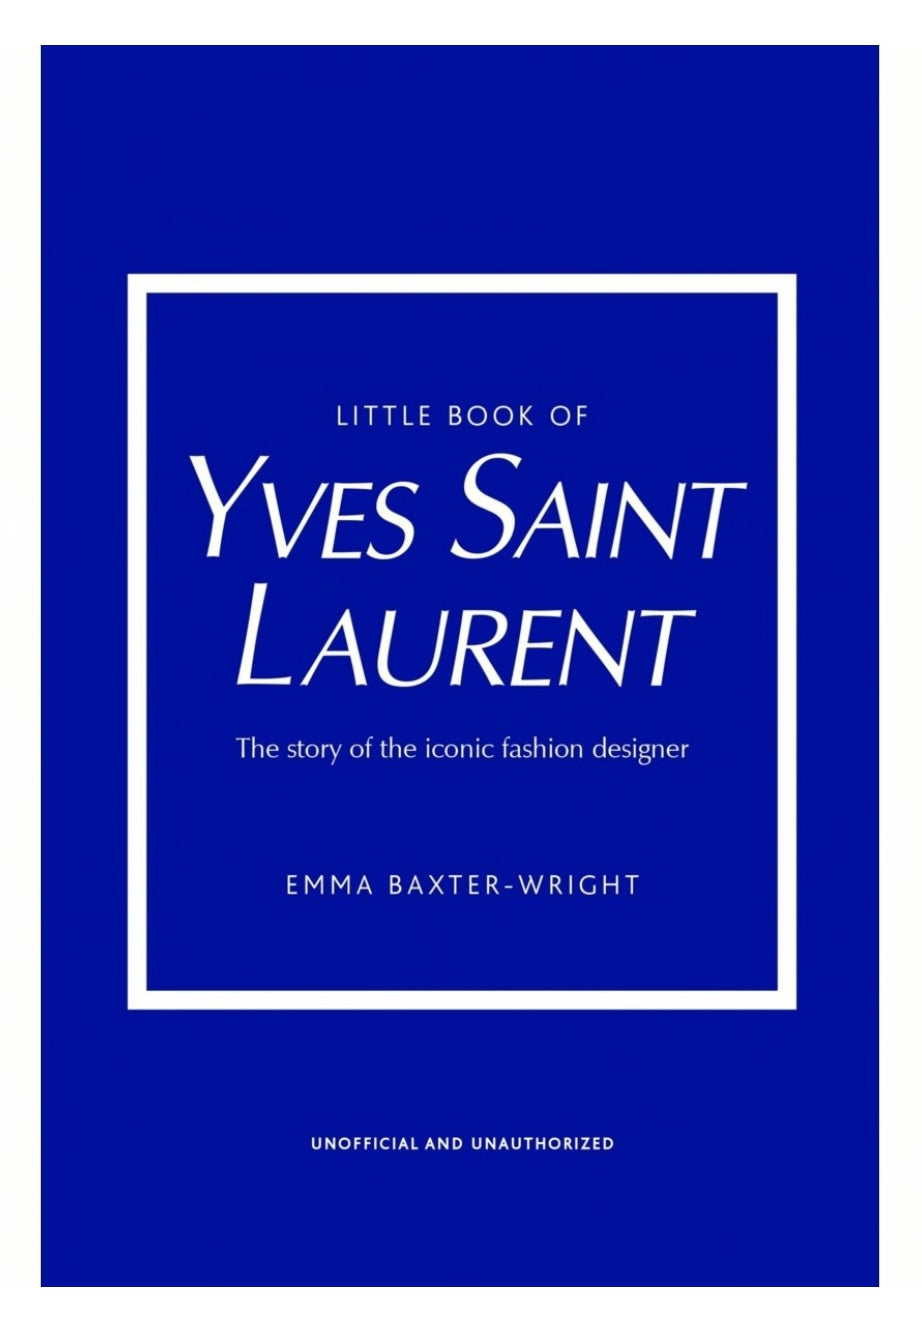 Little Book of Louis Vuitton – Karen Homer – Book Therapy